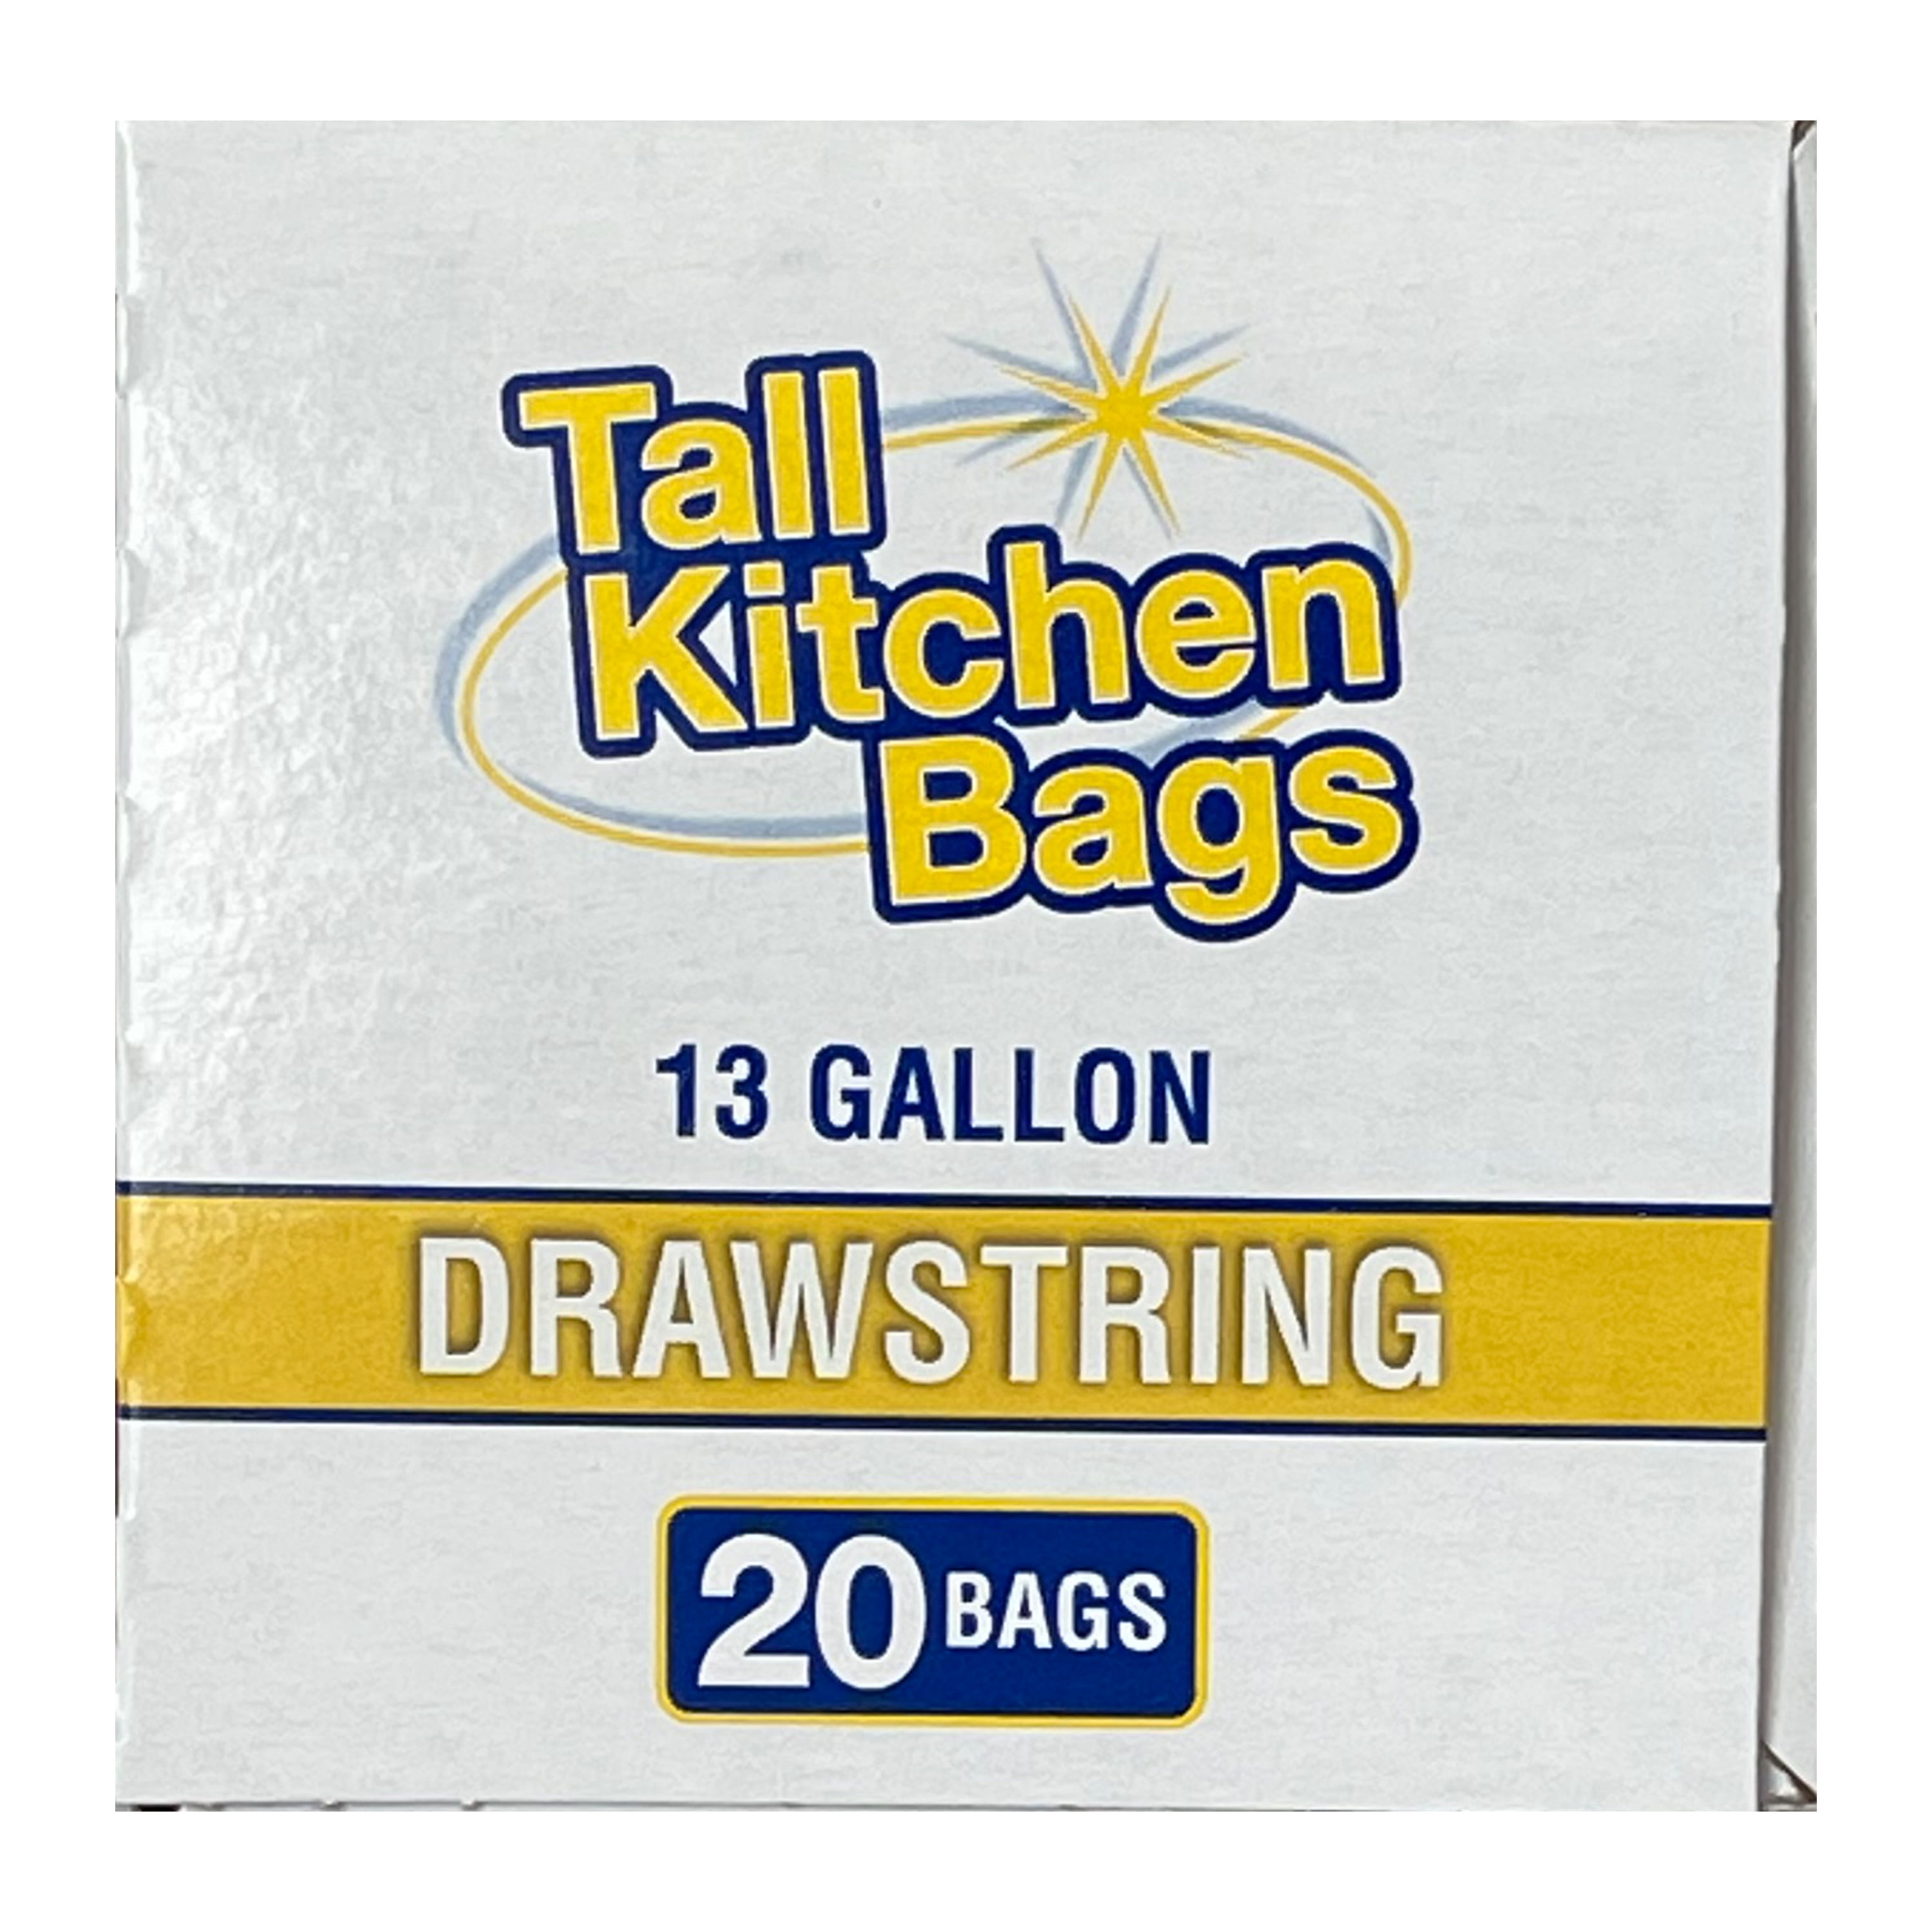 Handi-Bag Drawstring Kitchen Bags, 13 gal, 0.6 mil, 24 x 27.4, White, 50  Bags/Box, 6 Boxes/Carton (HAB6DK50CT)